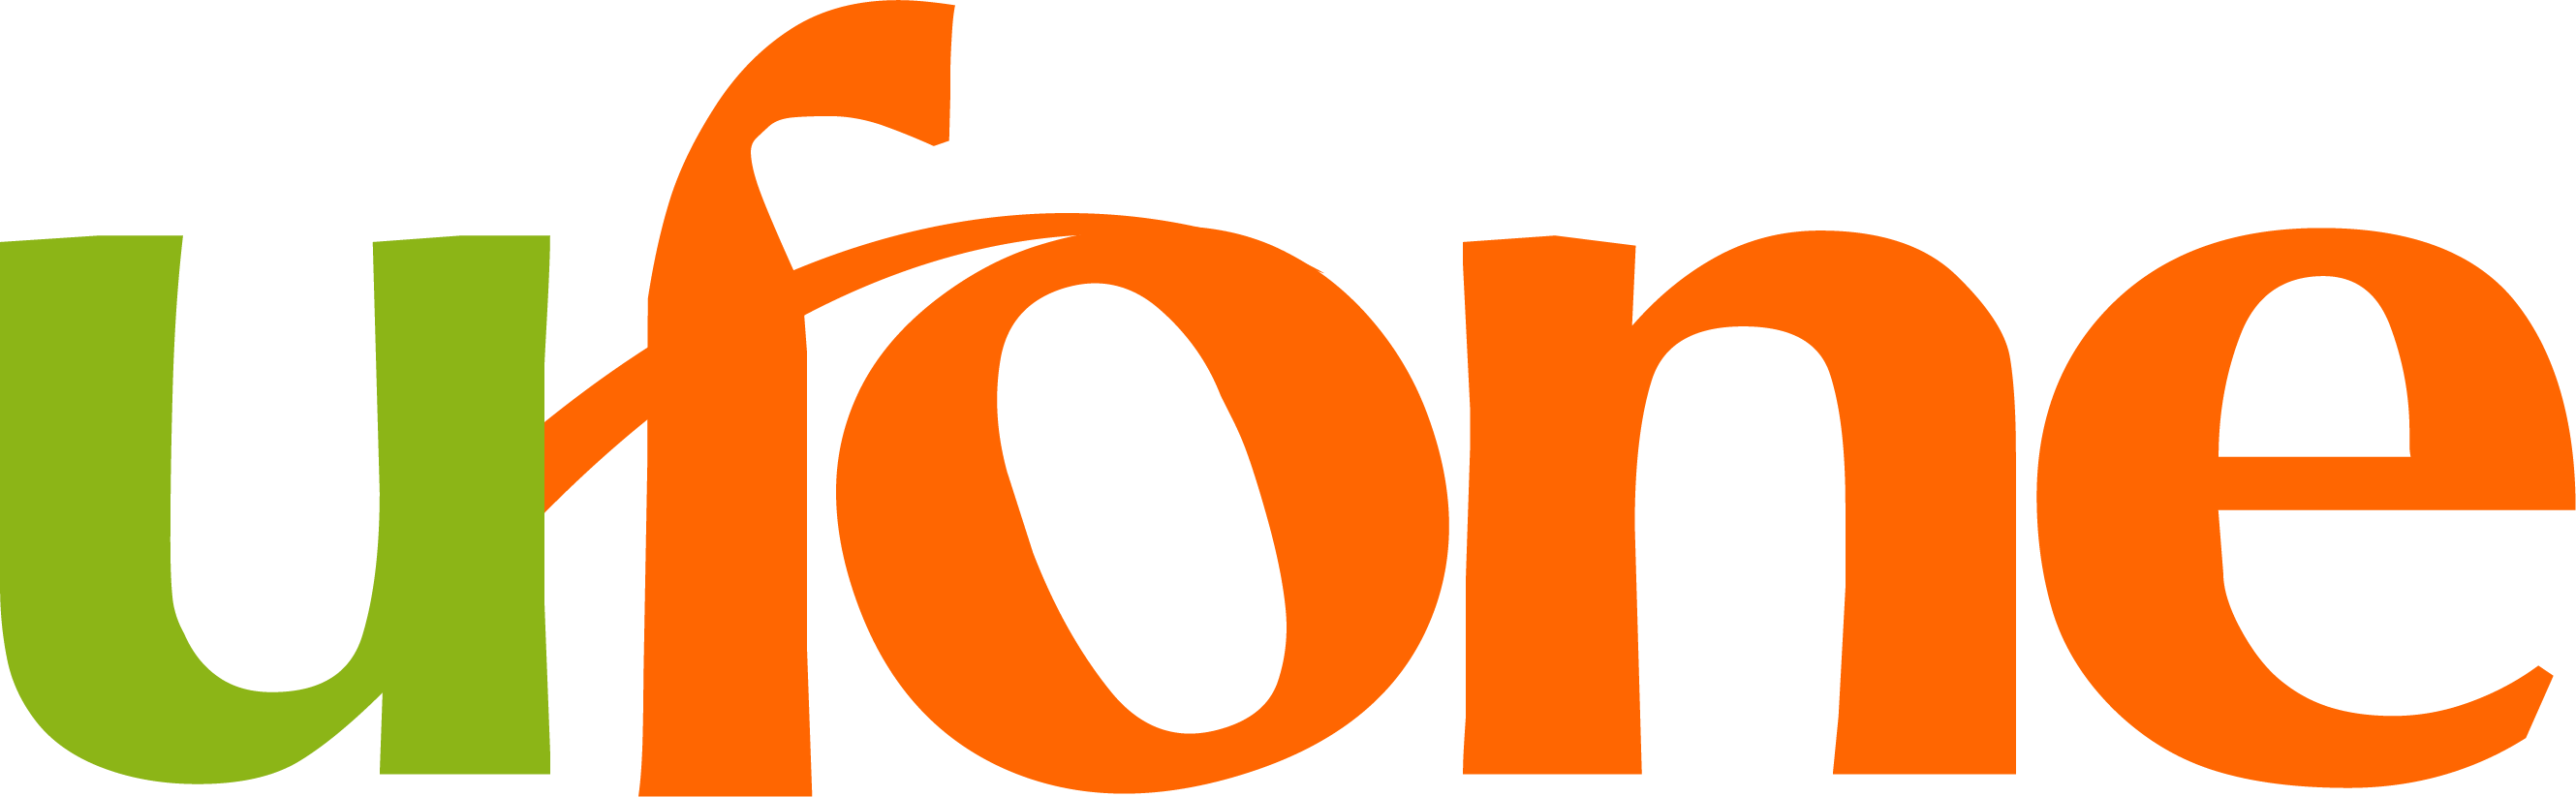 Ufone logo vector